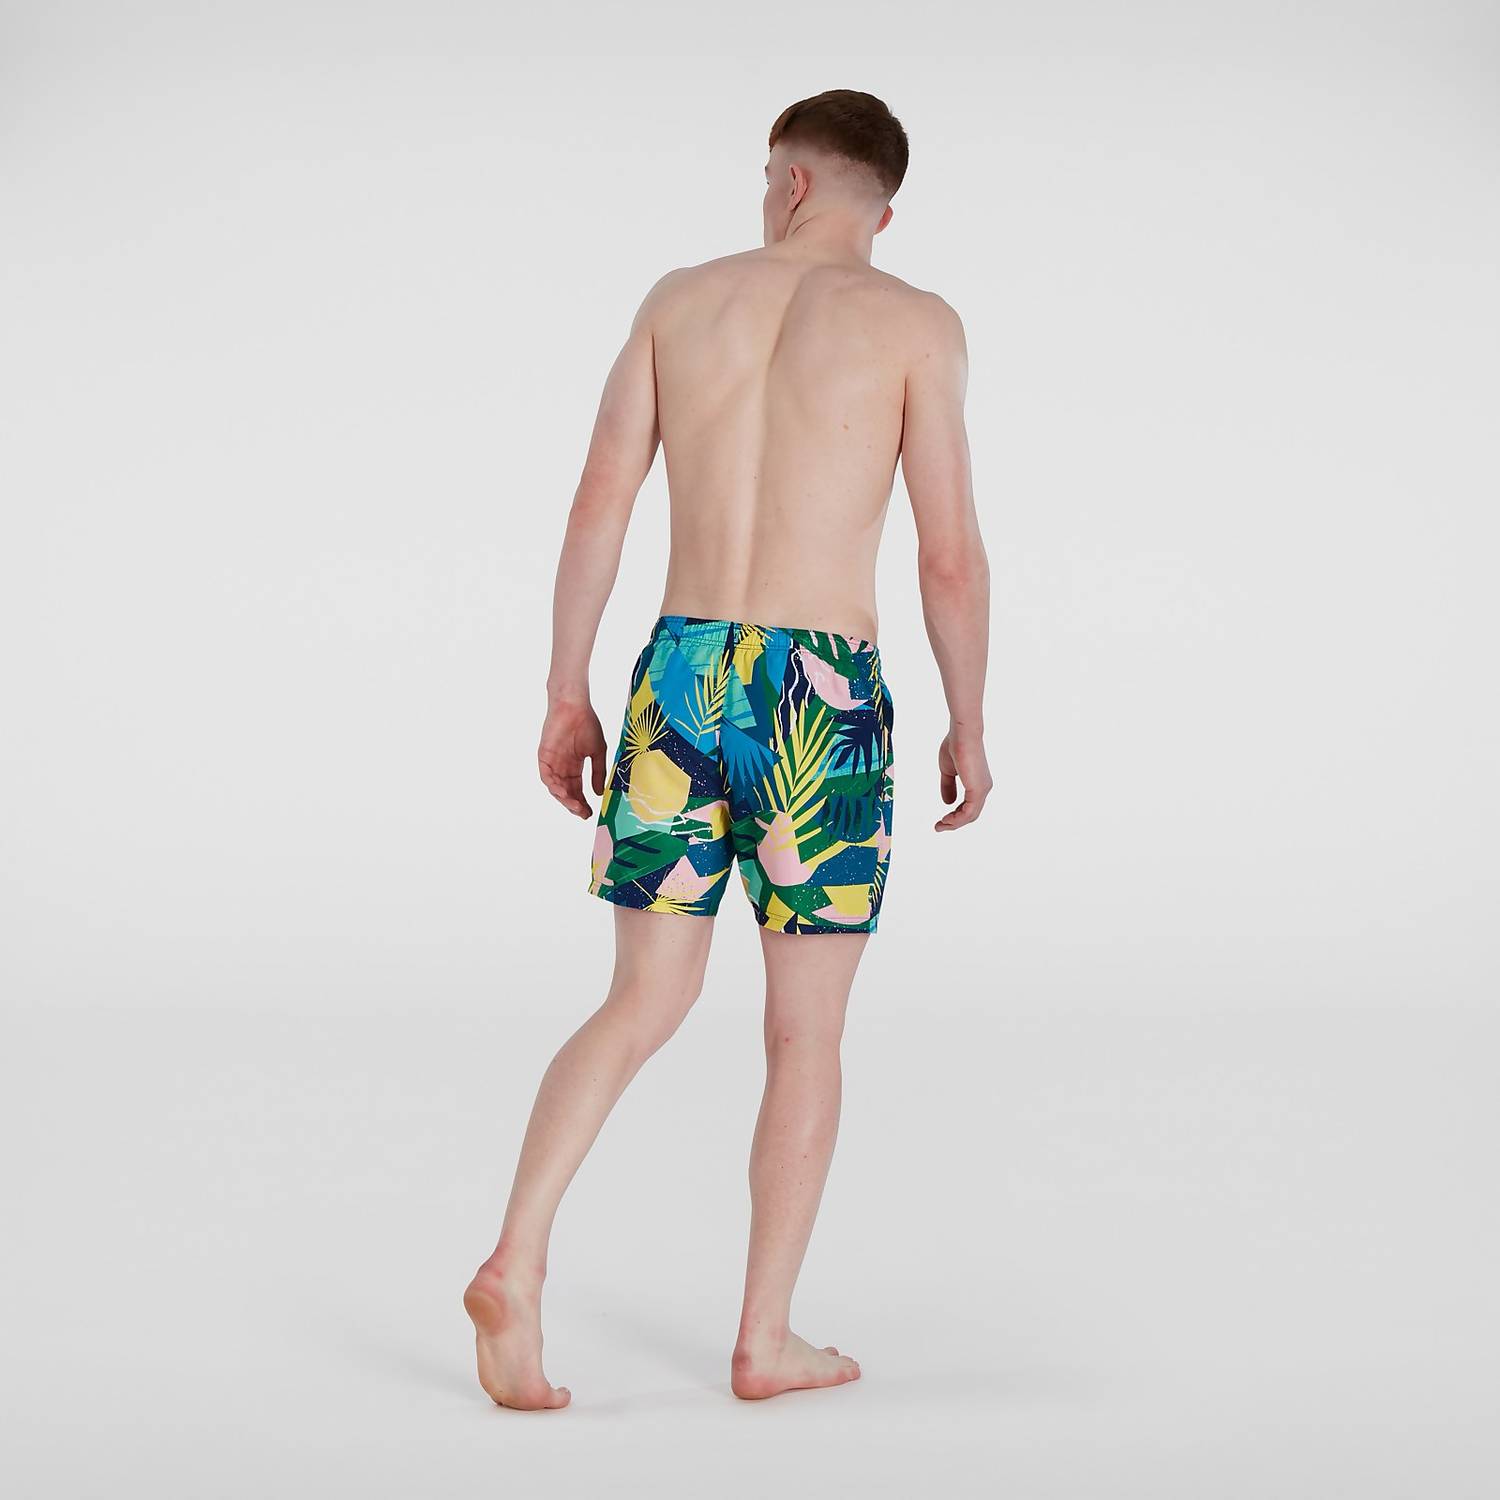 Hommes Short De Bain Homme Digital Printed Leisure 40 Cm Jaune/Rose Shorts De Bain Speedo – 1